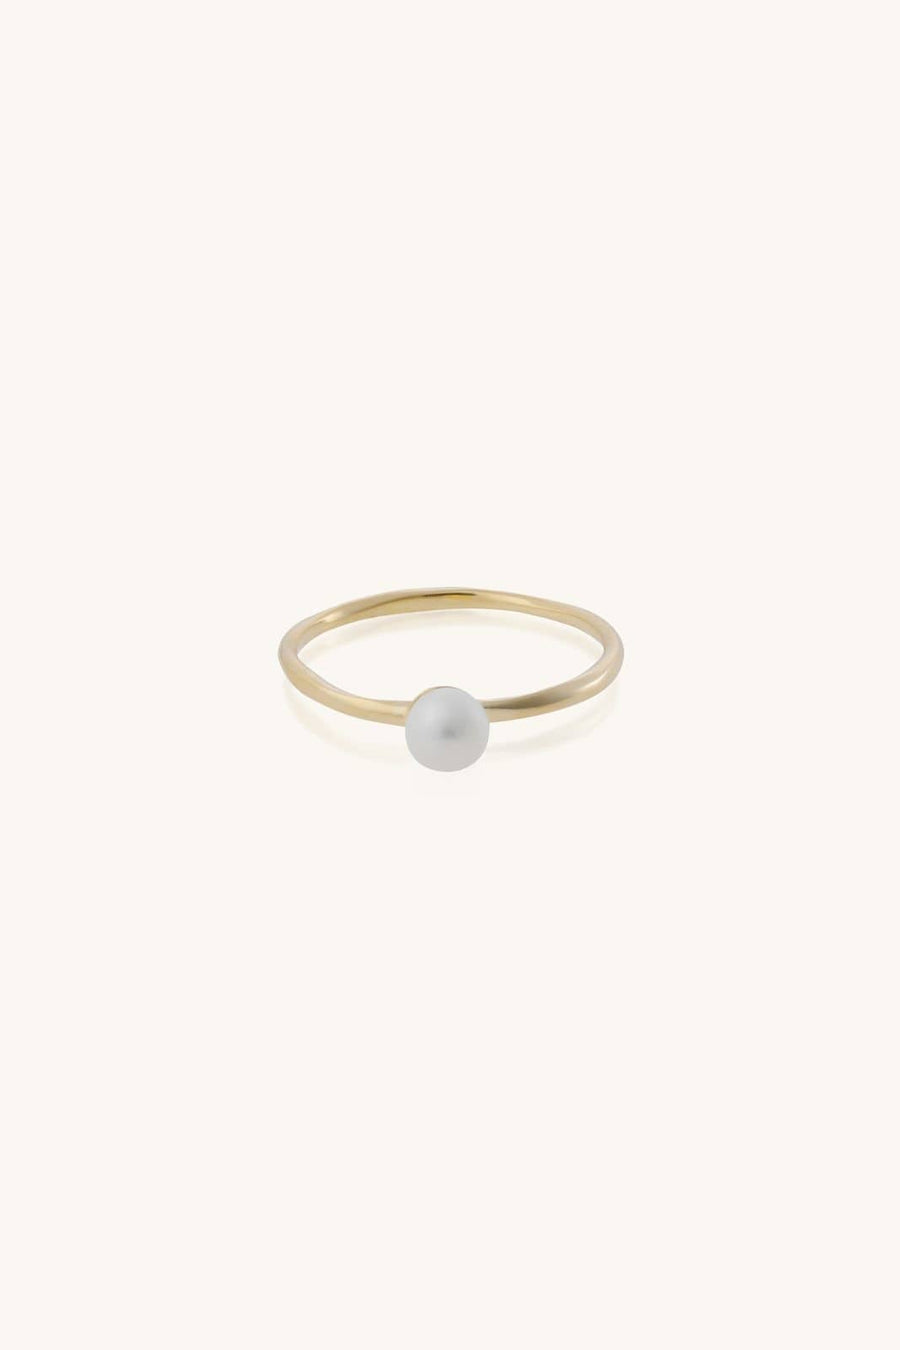 pearl, minimal, ring, elegant, delicate, understated, sophisticated